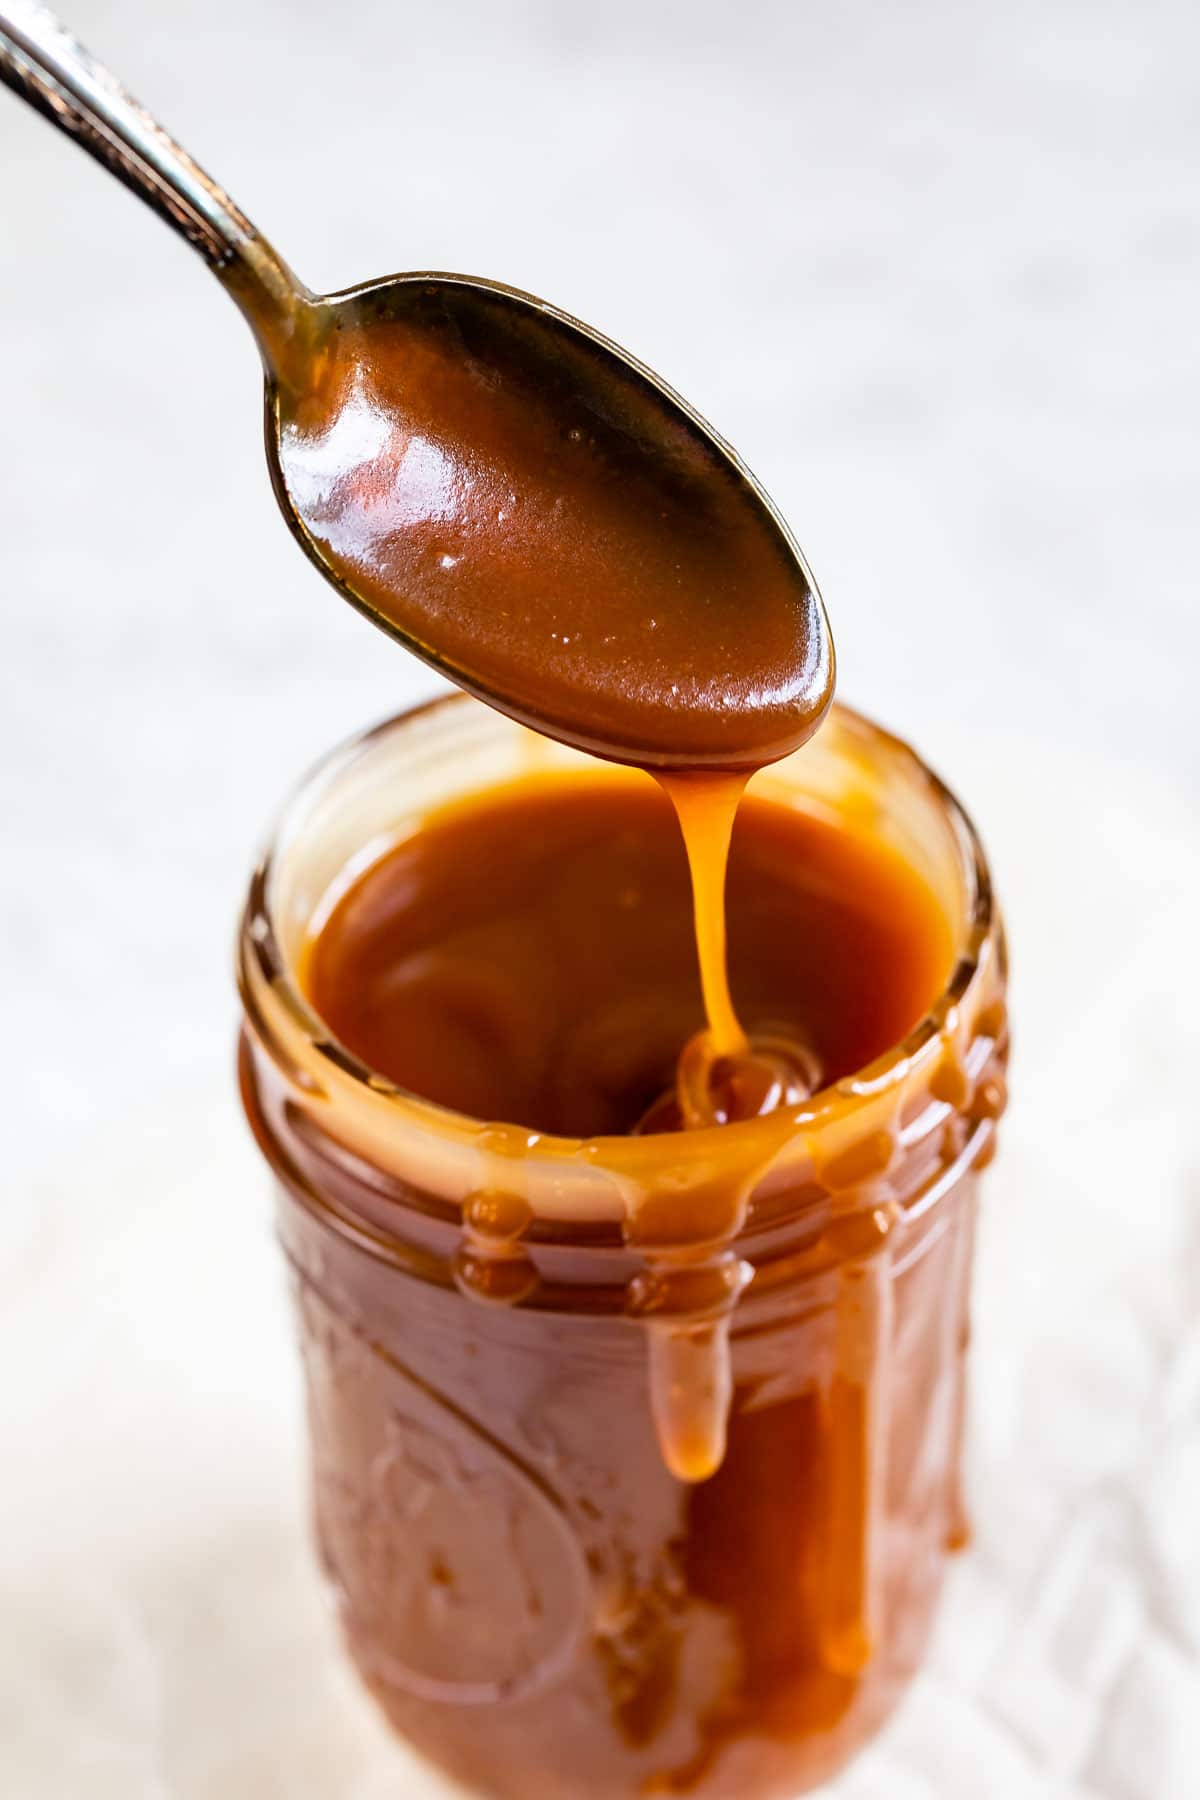 Homemade Caramel Recipe Story - The Carefree Kitchen